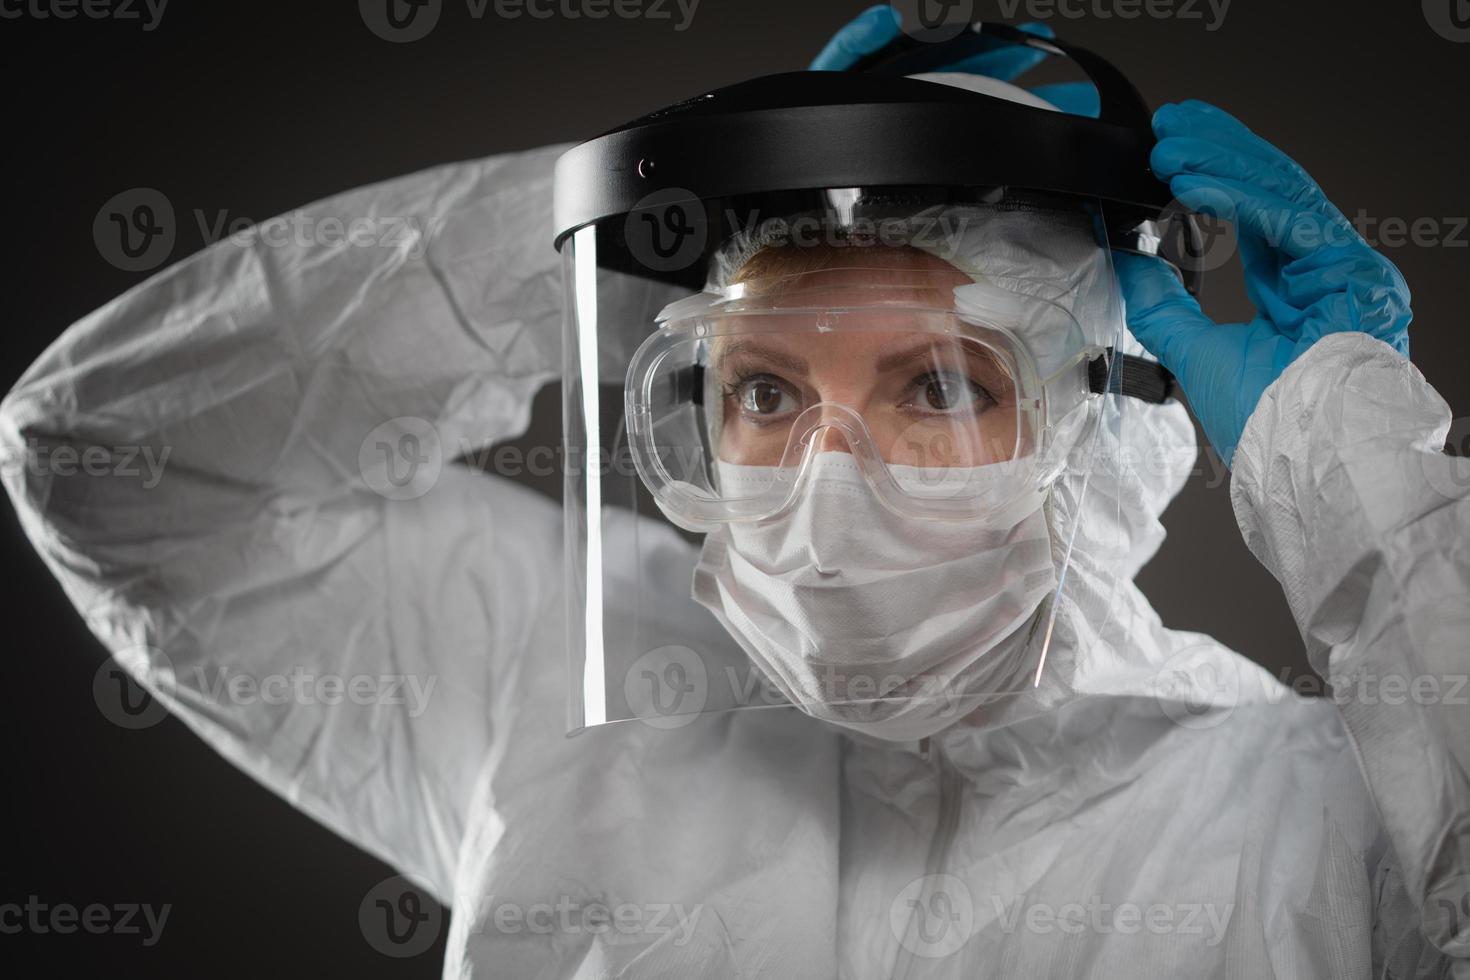 vrouw medisch arbeider vervelend beschermend gezicht masker en uitrusting tegen donker achtergrond foto